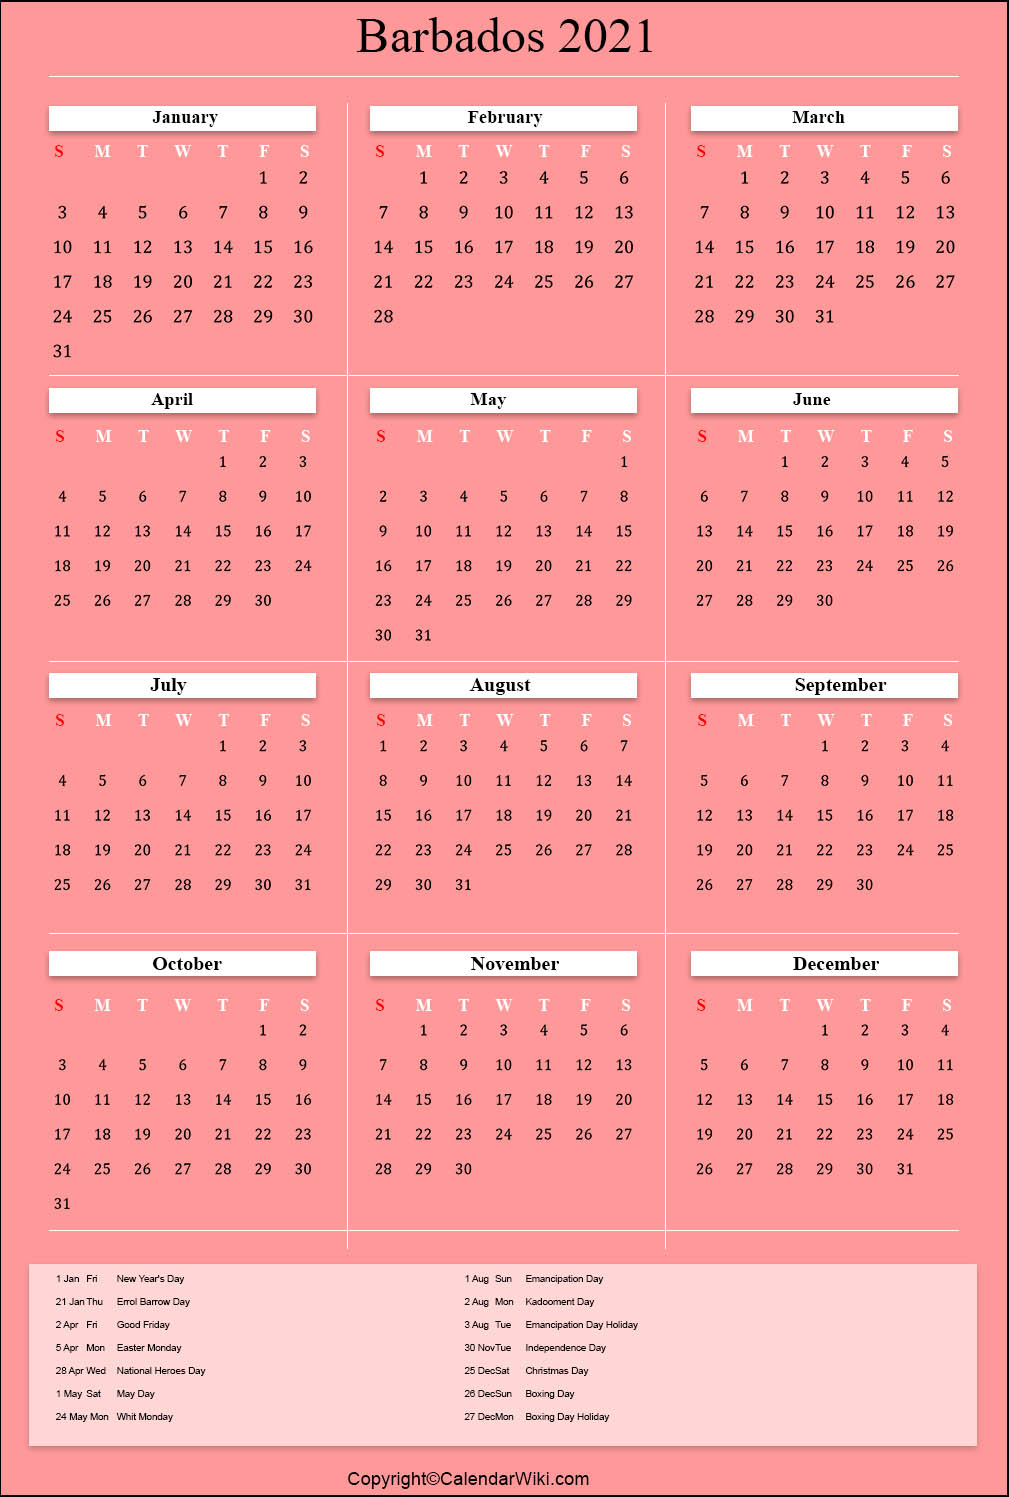 printable-barbados-calendar-2021-with-holidays-public-holidays